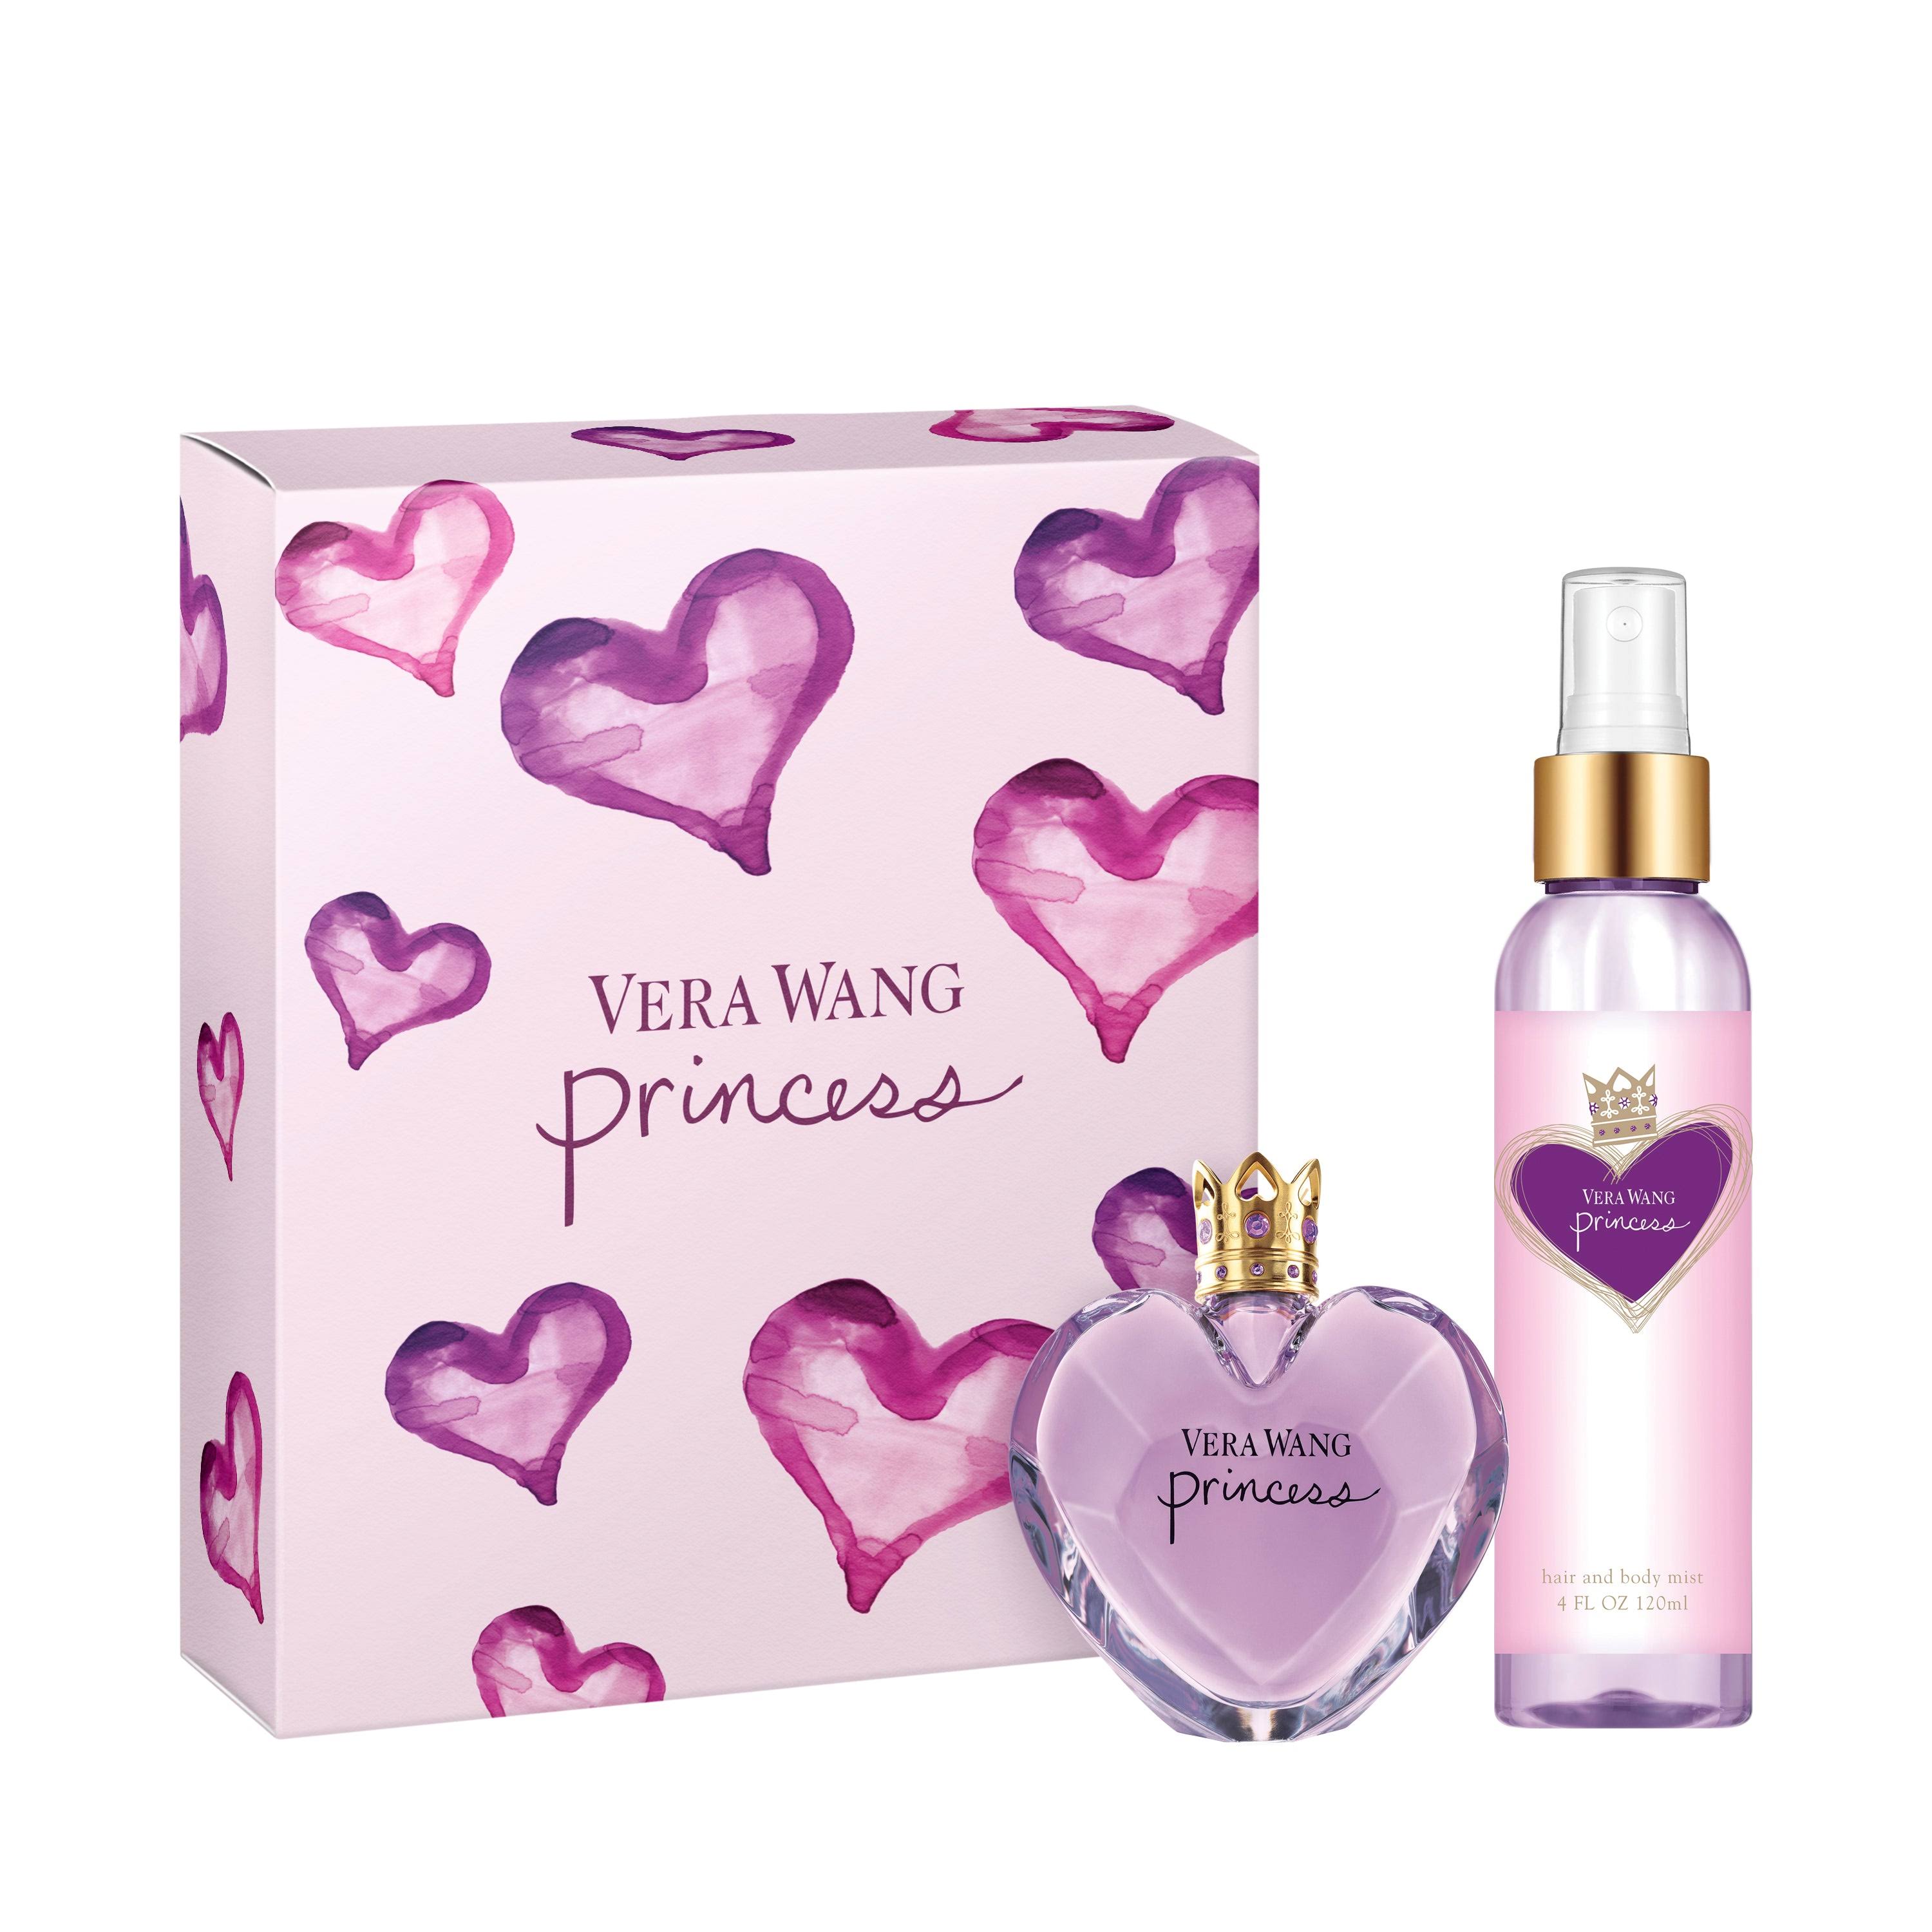 Vera Wang Princess Duo Gift Set 30 ml EDT 118 ml Body Mist